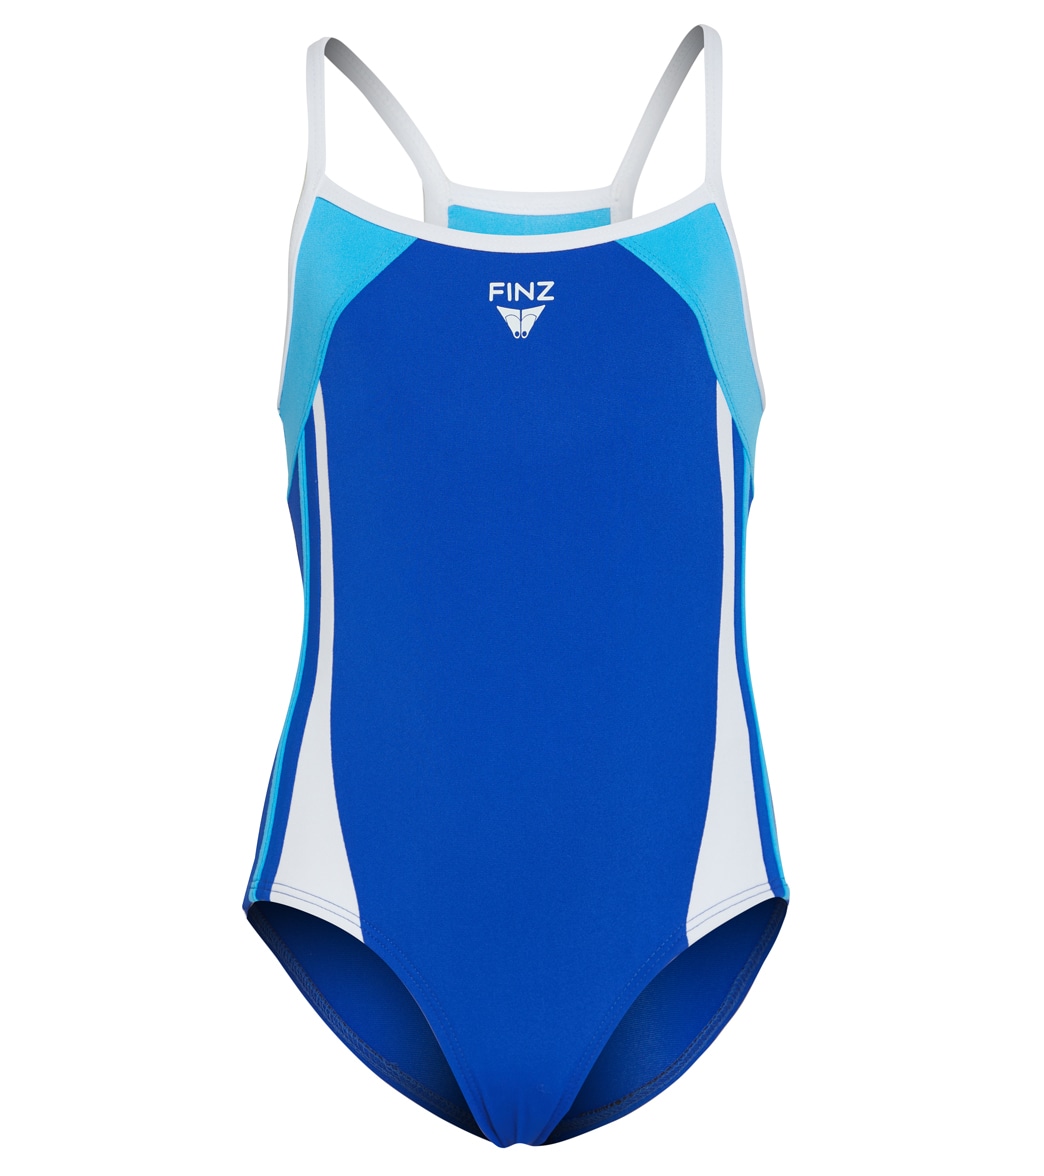 Finz Girls' Sportback One Piece Swimsuit - Indigo/Turquoise 10 - Swimoutlet.com